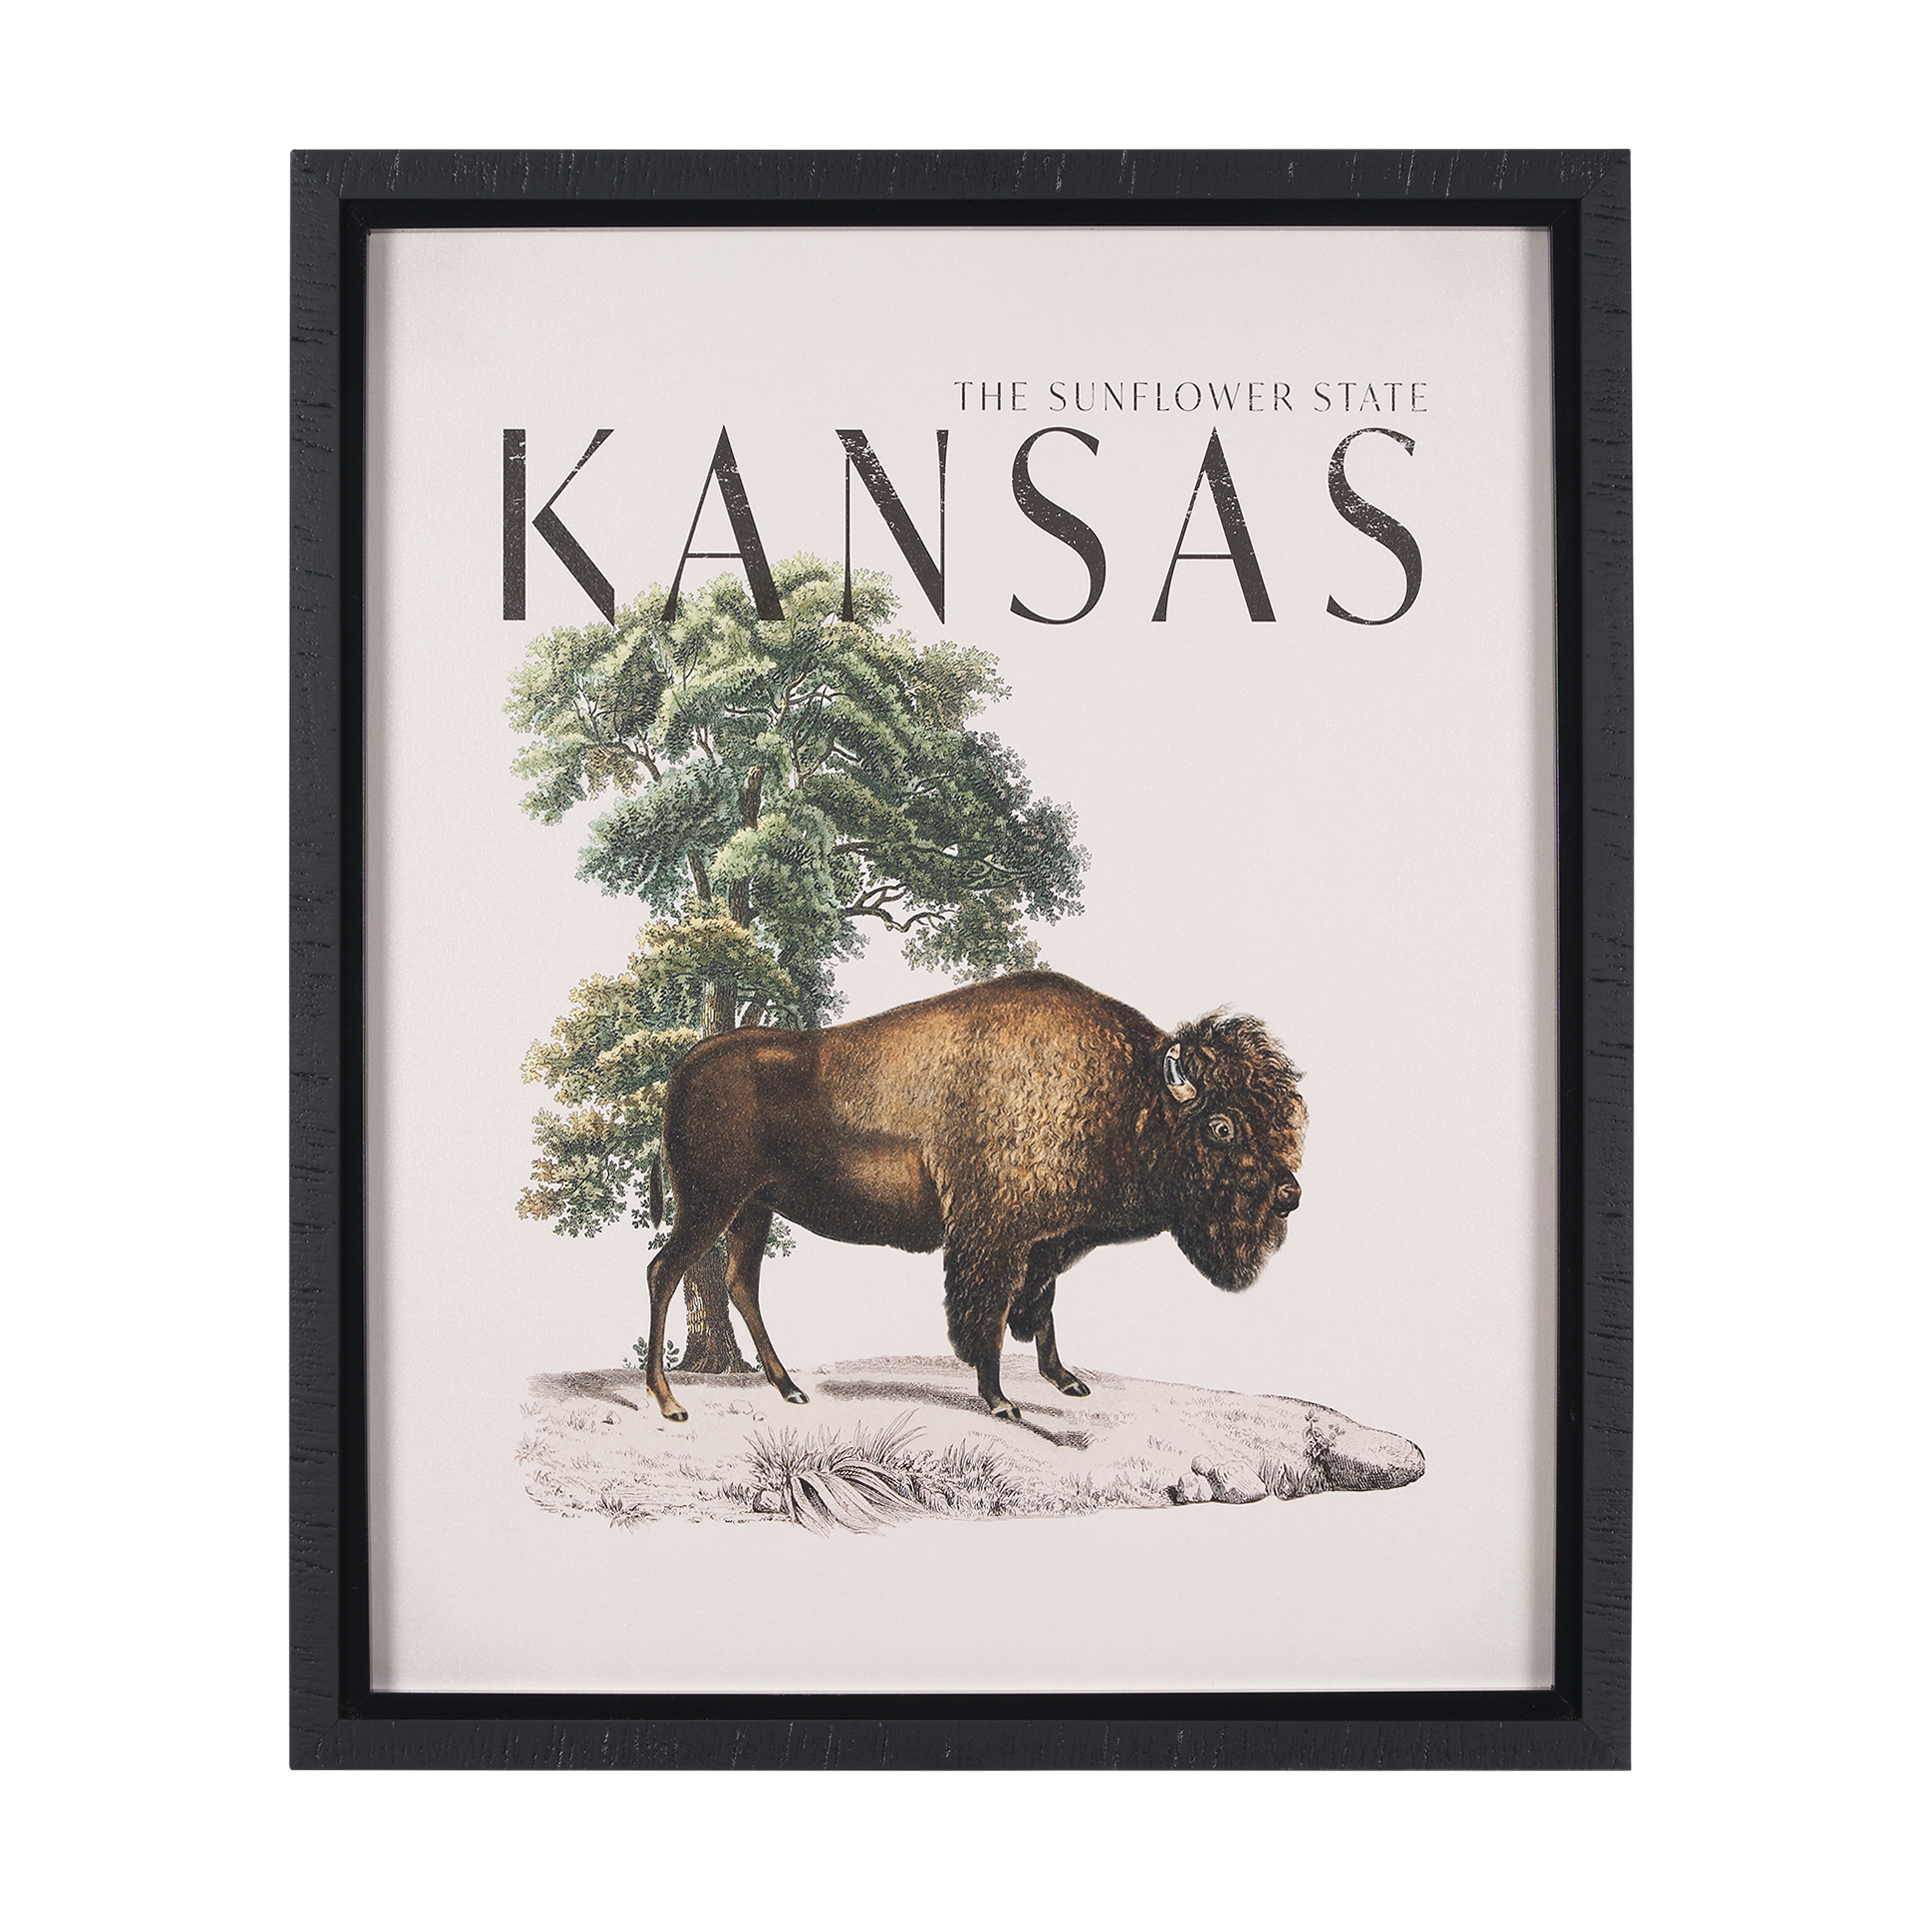 Travel Guide - Kansas (26 x 32)